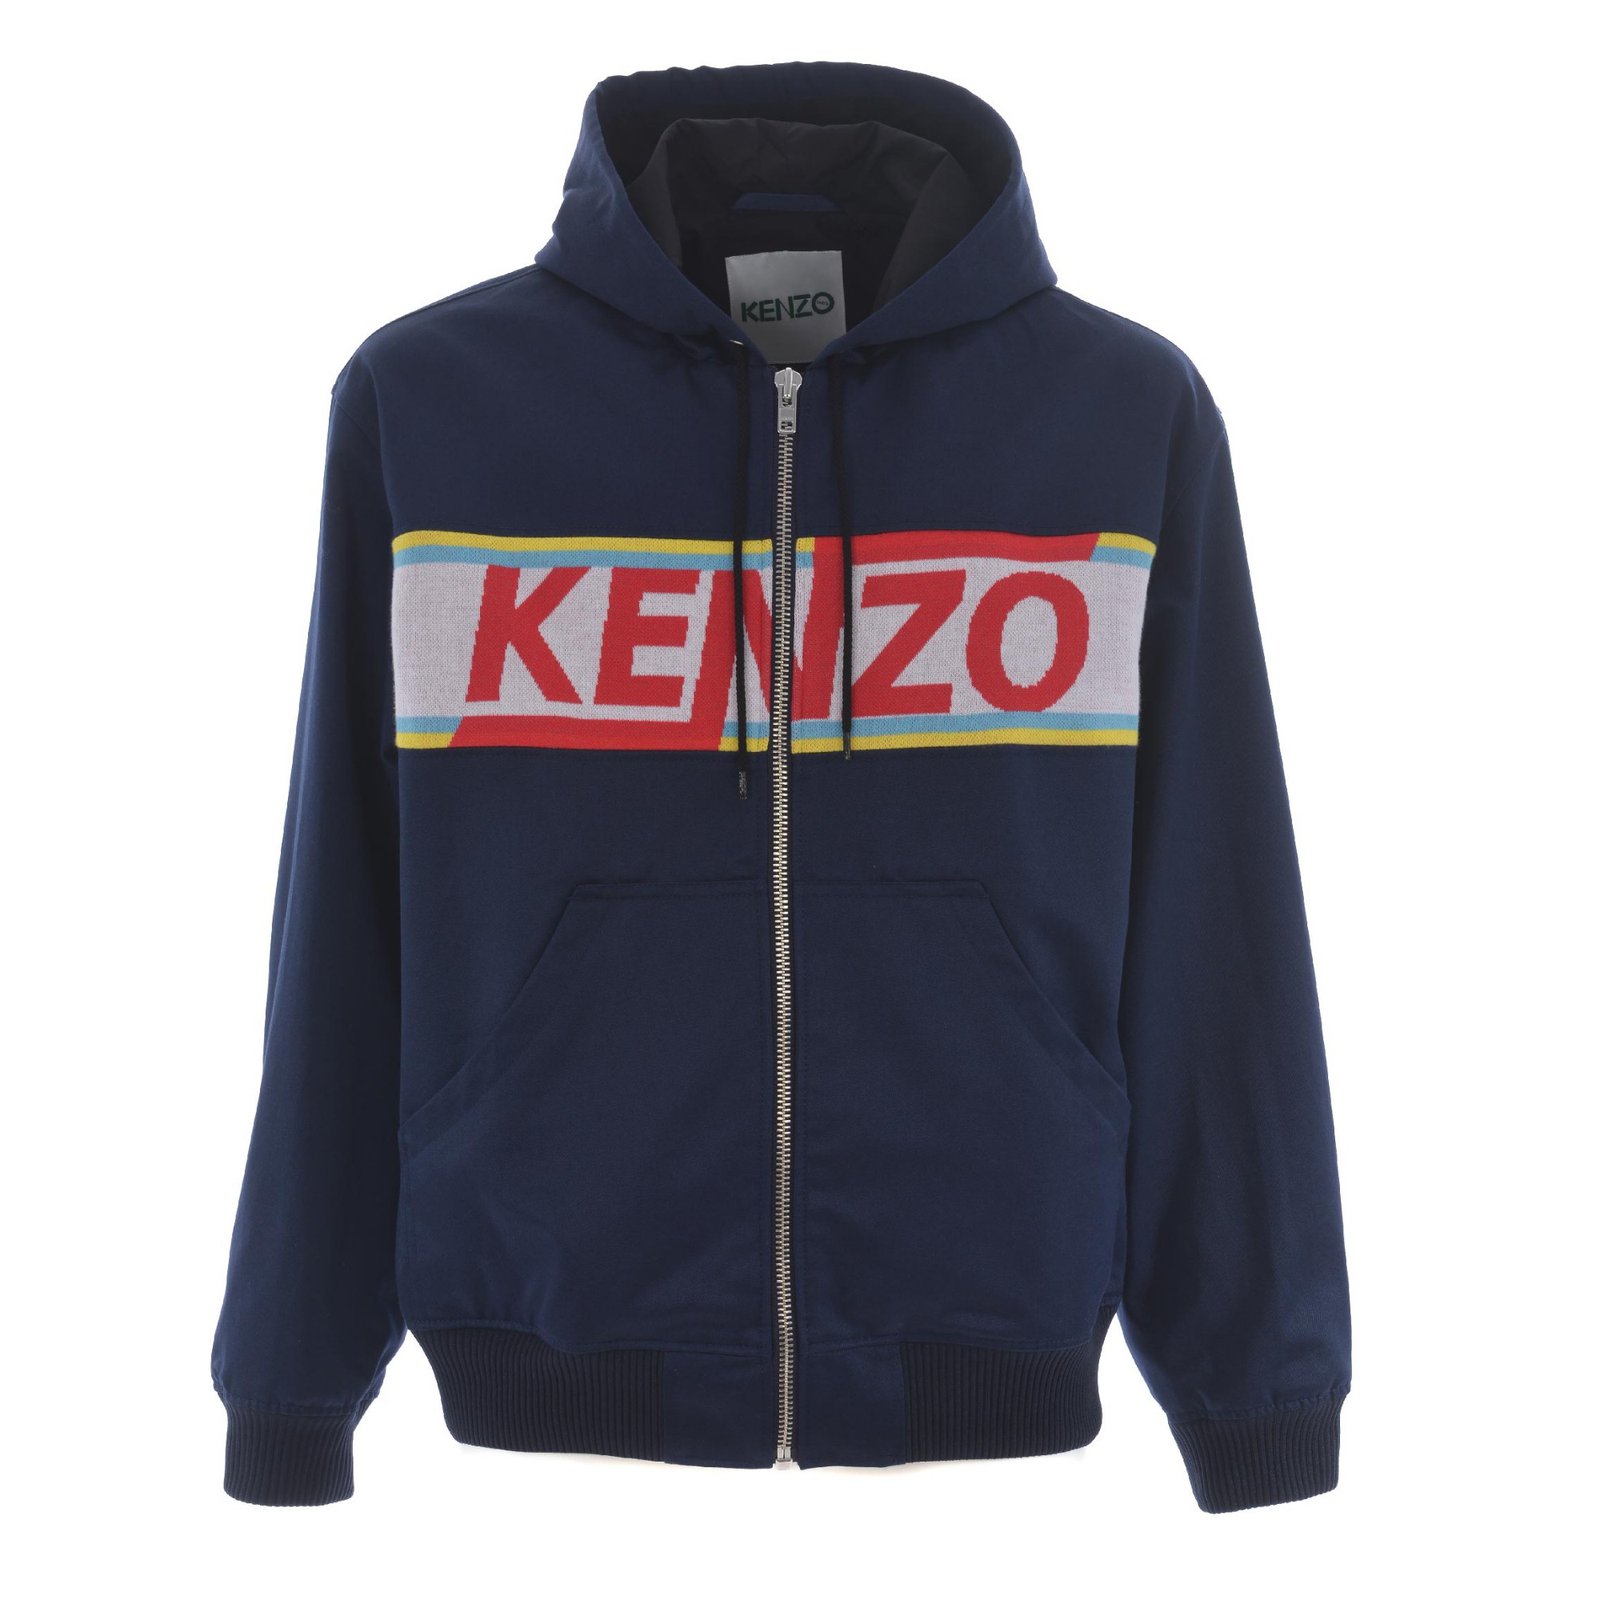 kenzo outerwear